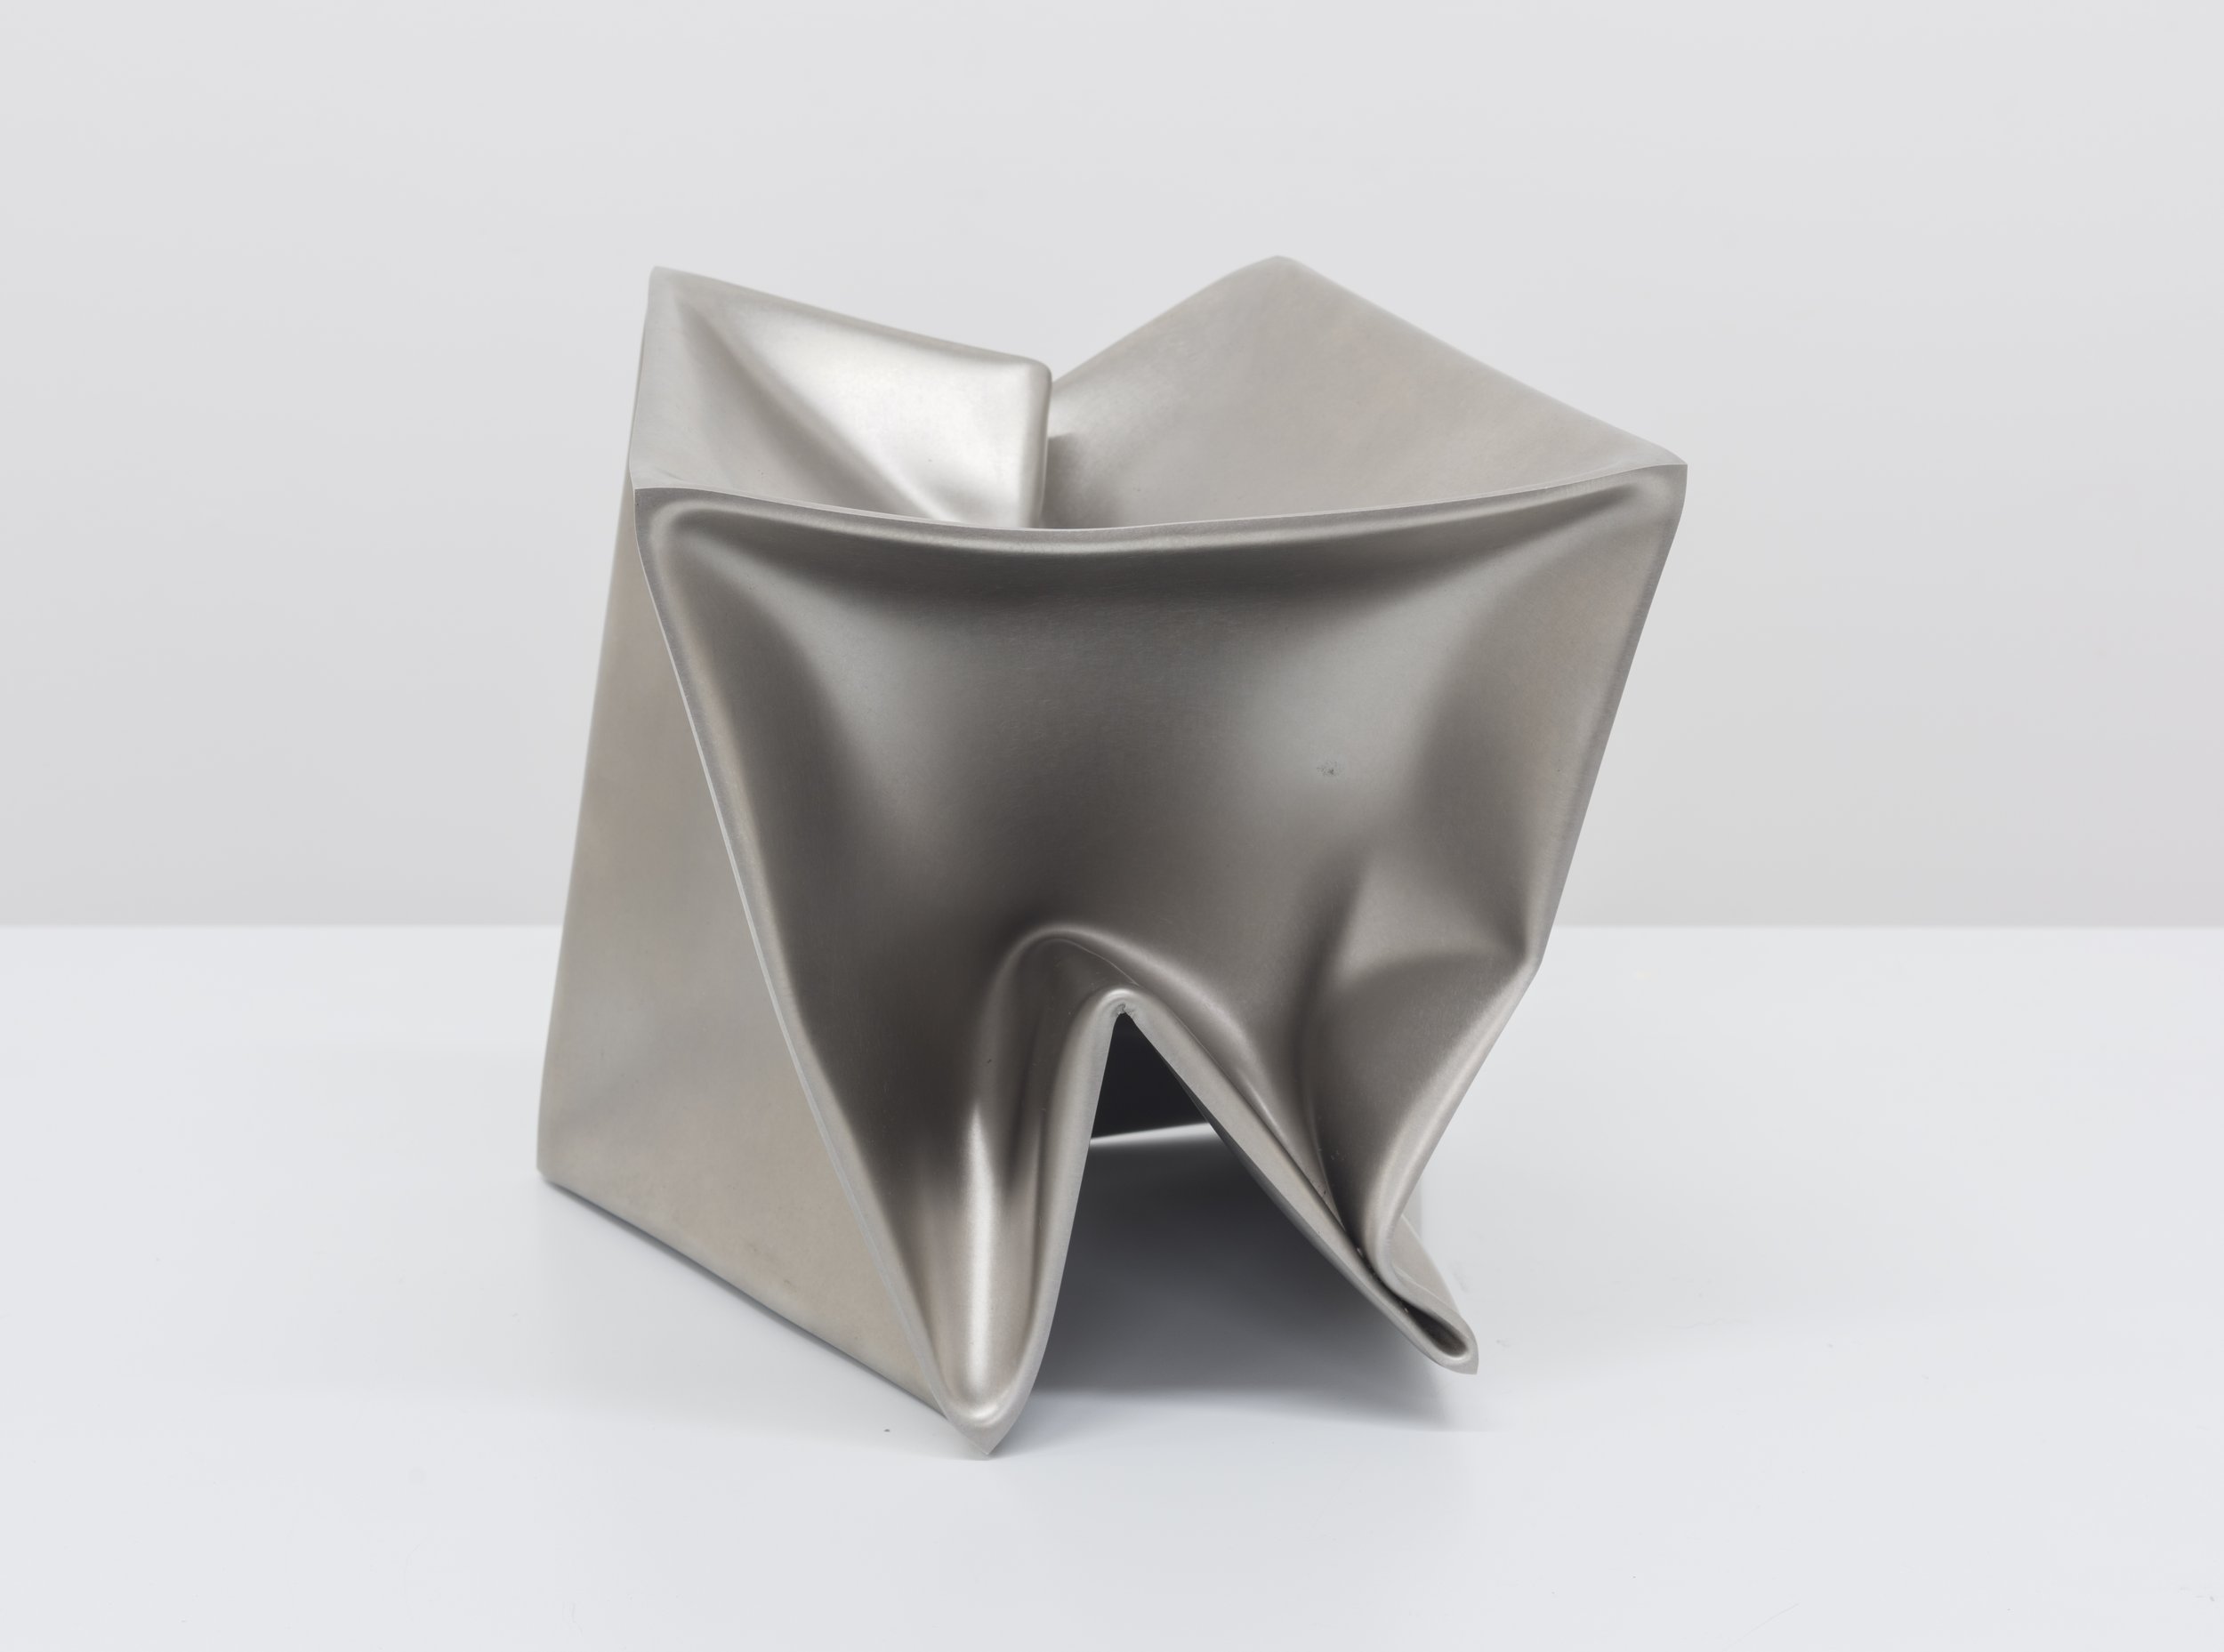  Ewerdt Hilgemann  Imploded Cube #100401 , 2010 stainless steel 9 1/2 x 9 1/2 x 9 1/2 in&nbsp; (24 x 24 x 24 cm) 